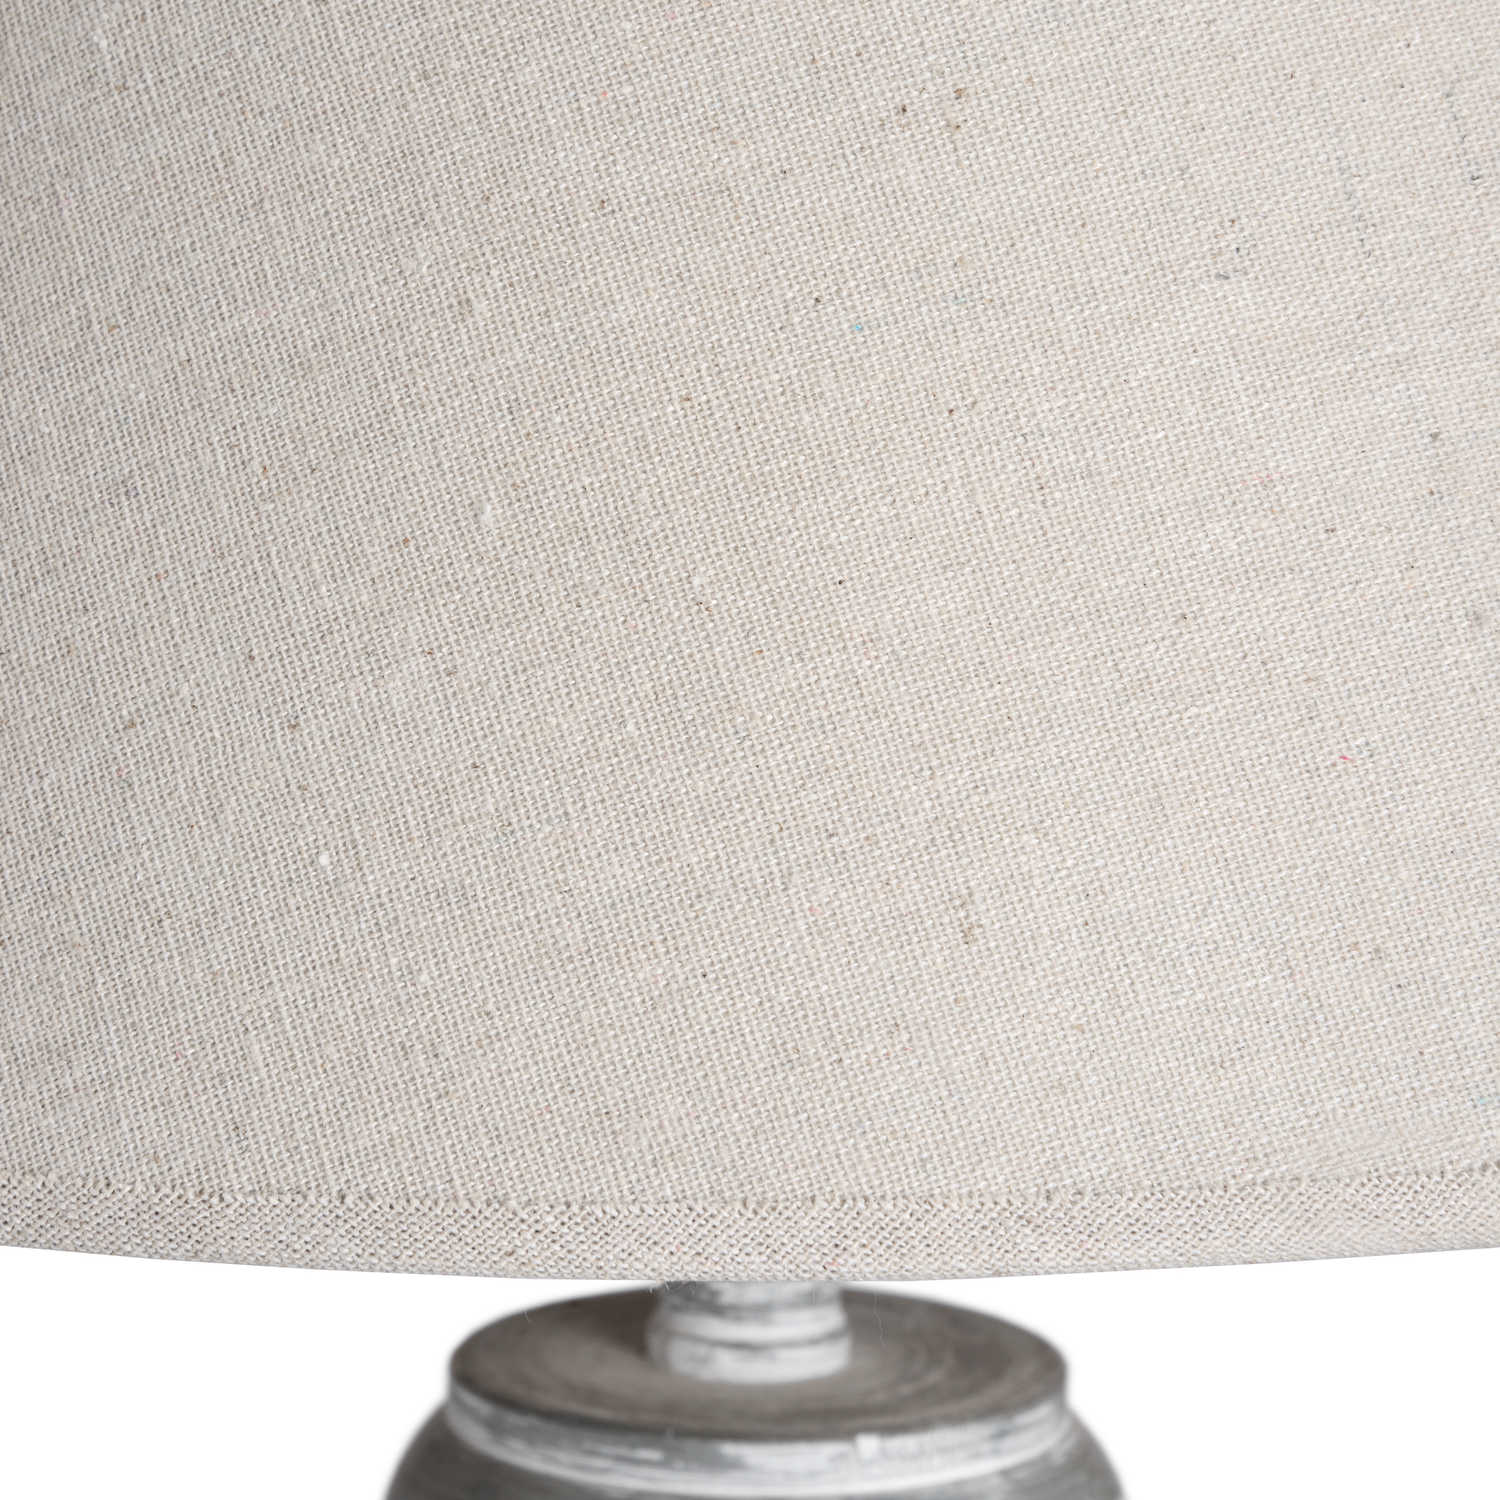 ithaca-floor-lamp_16297-b fabric from JLP